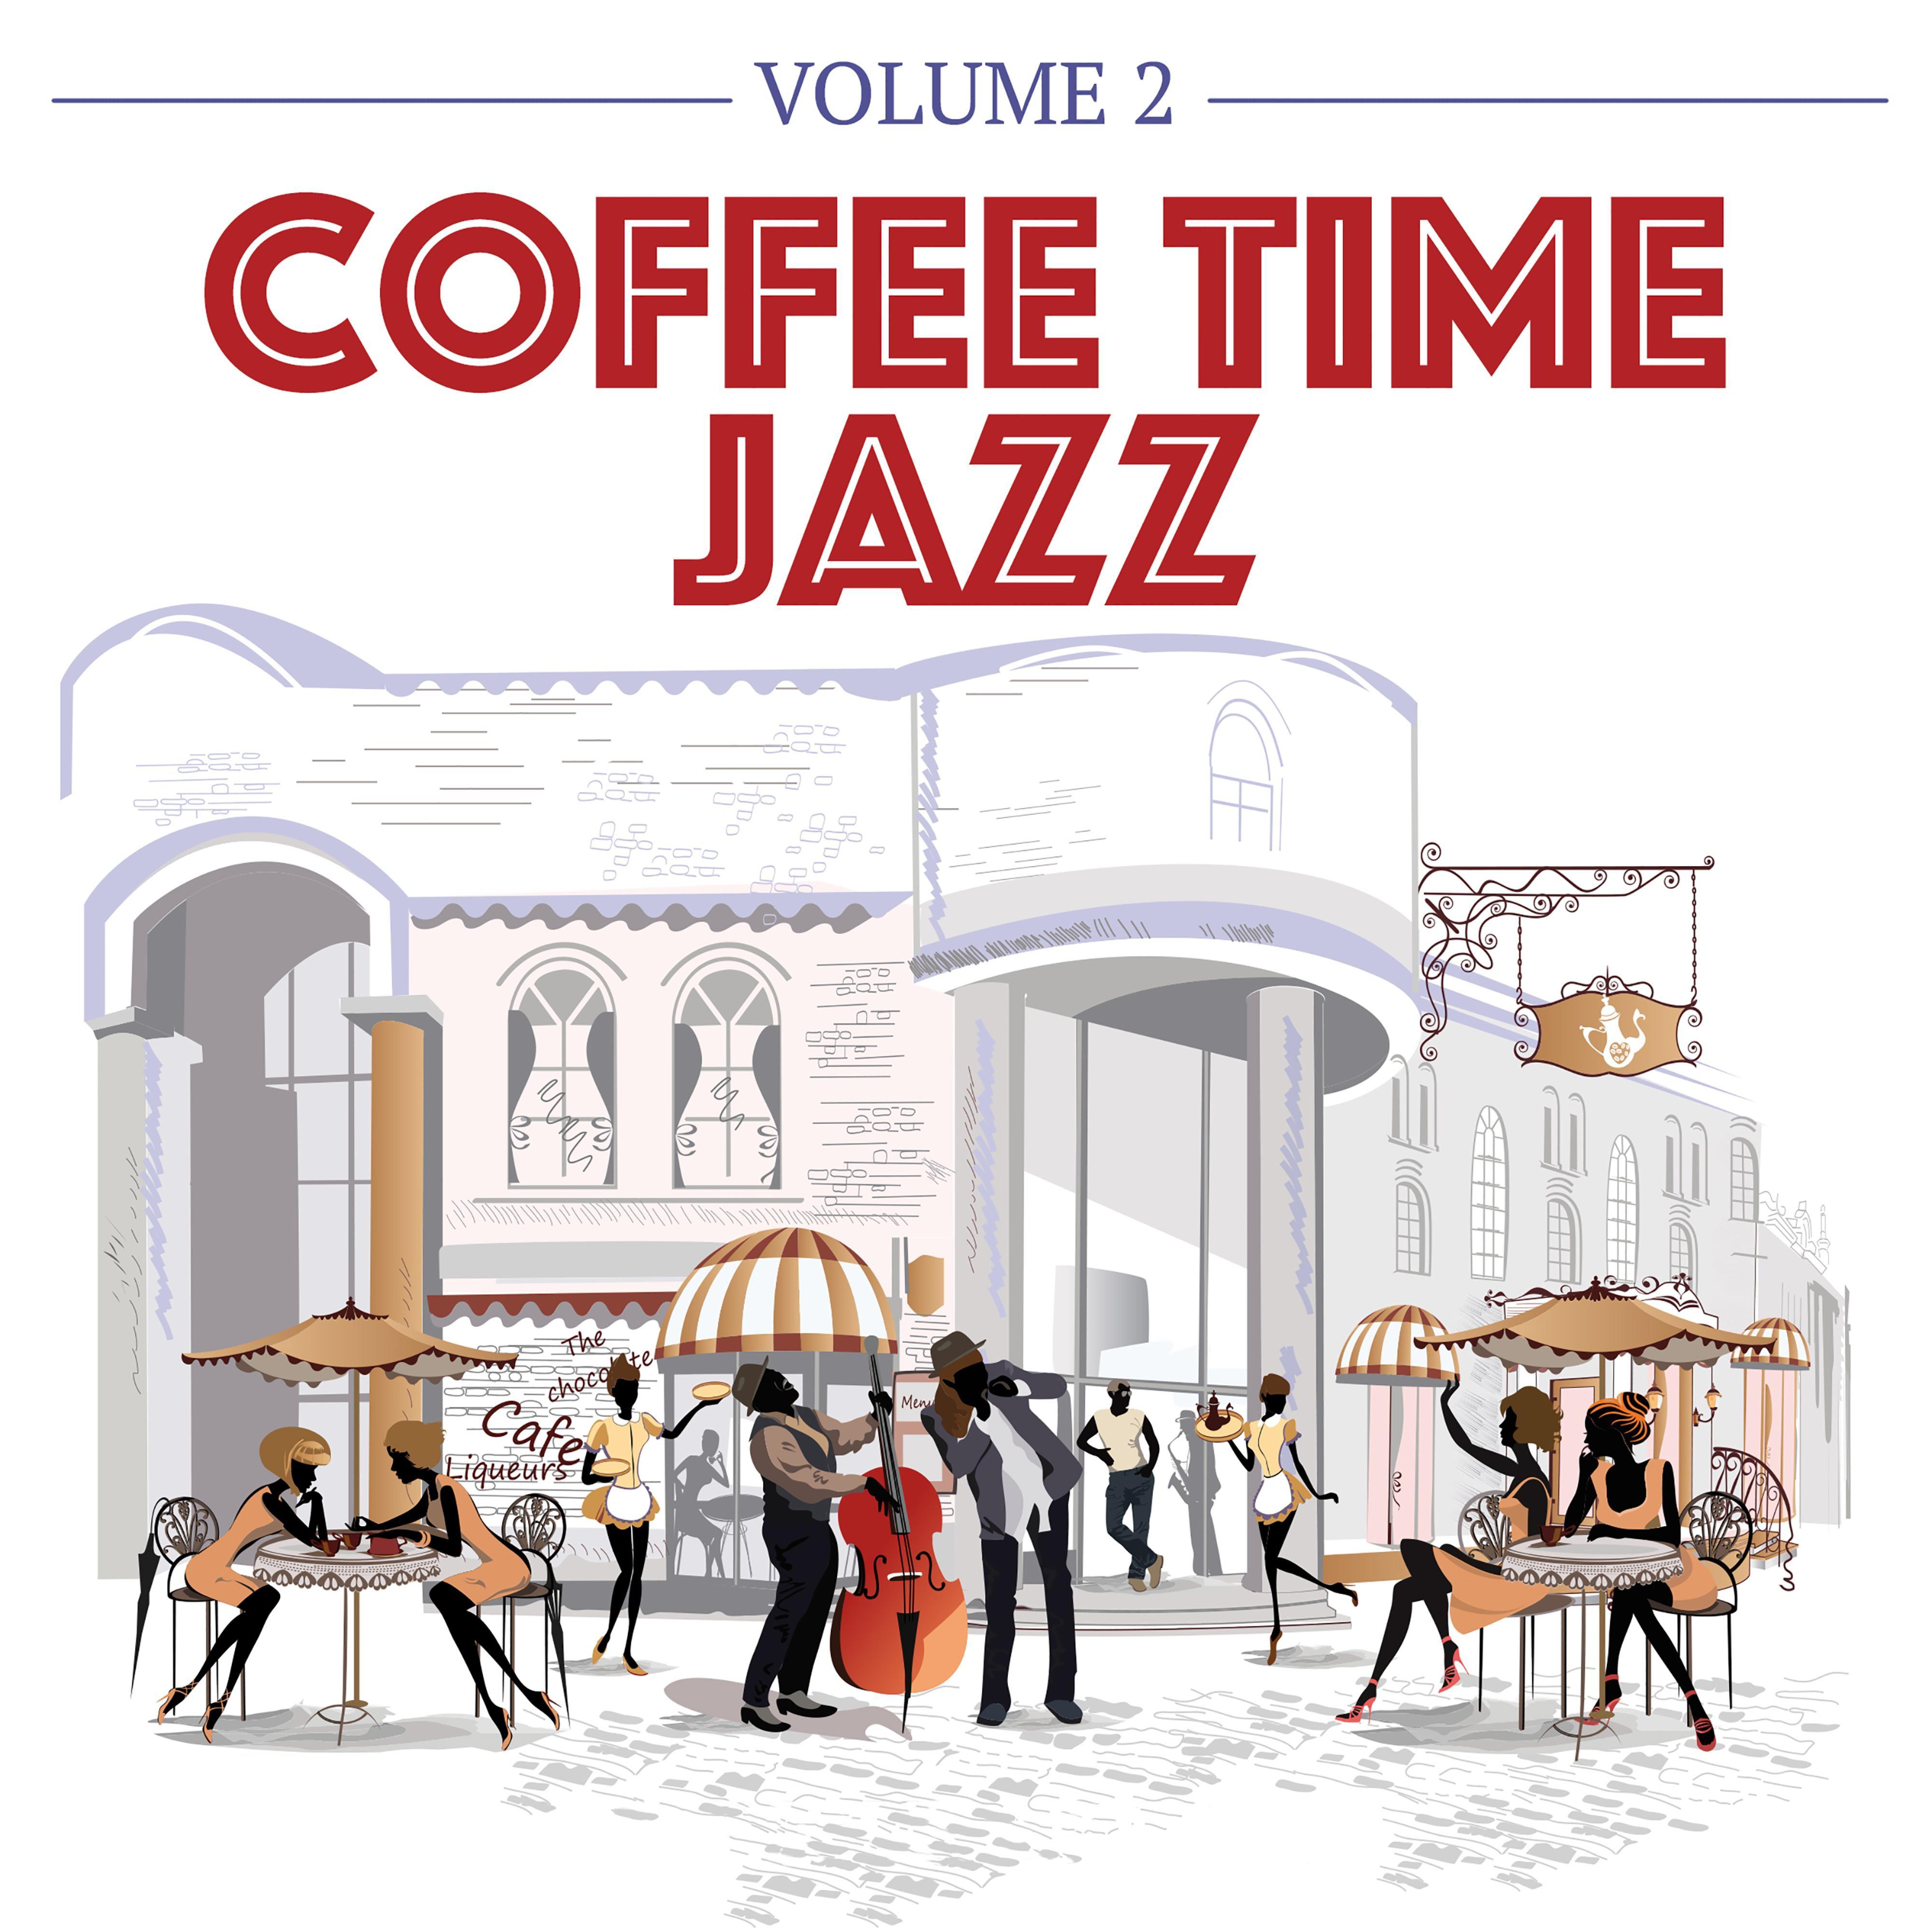 Coffee Time Jazz, Volume 2